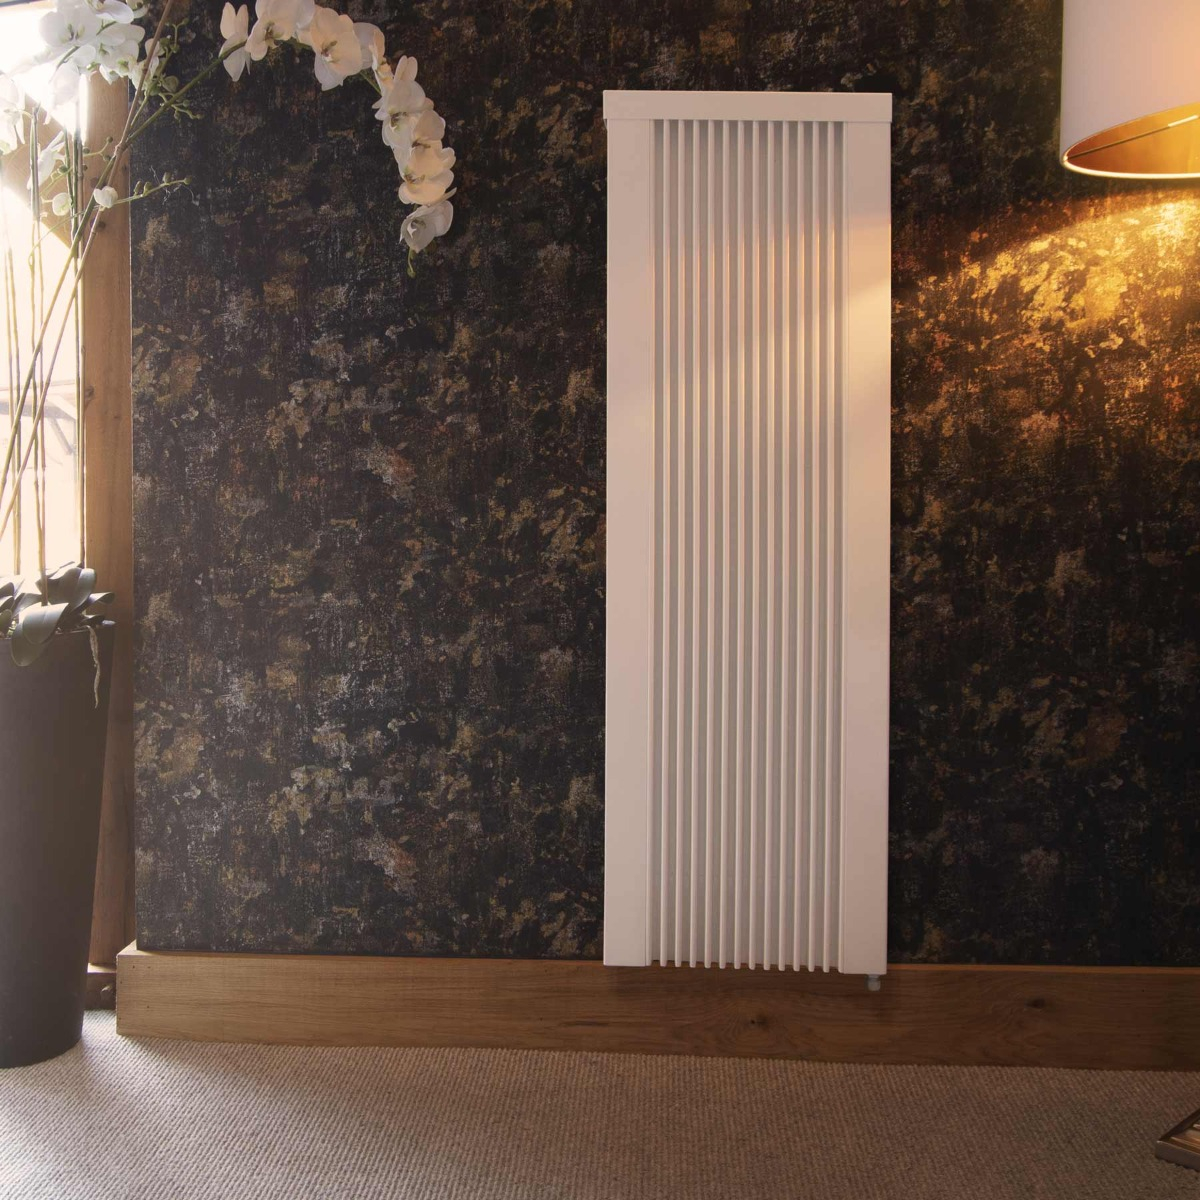 Technotherm KS DSM vertical electric radiator in living room